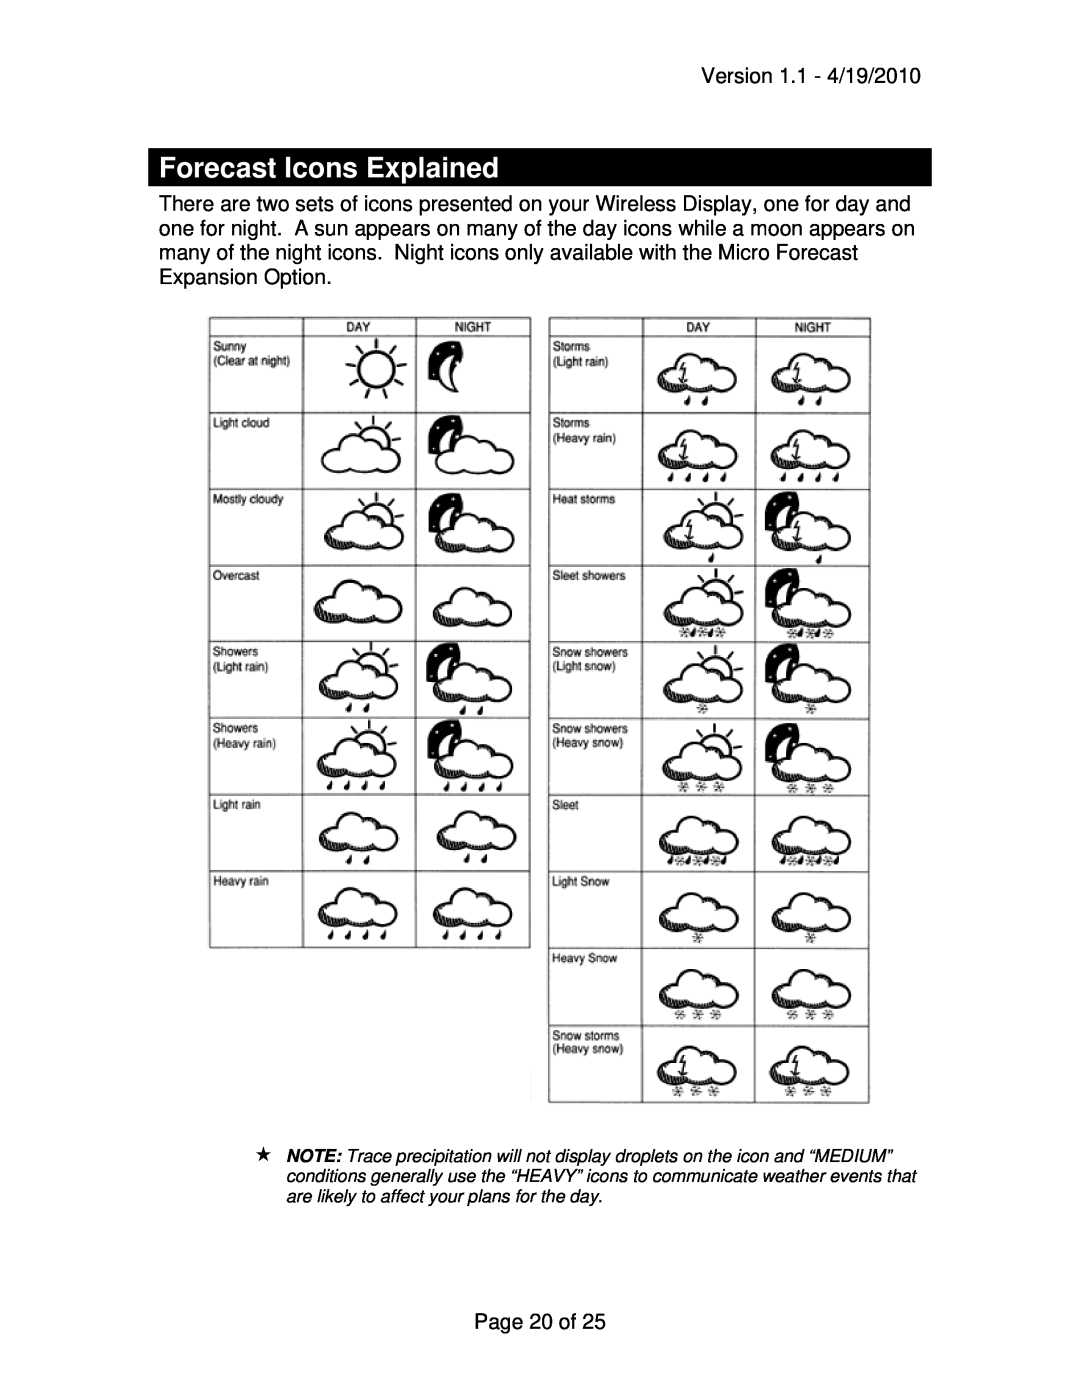 La Crosse Technology WD-9535 owner manual Forecast Icons Explained 